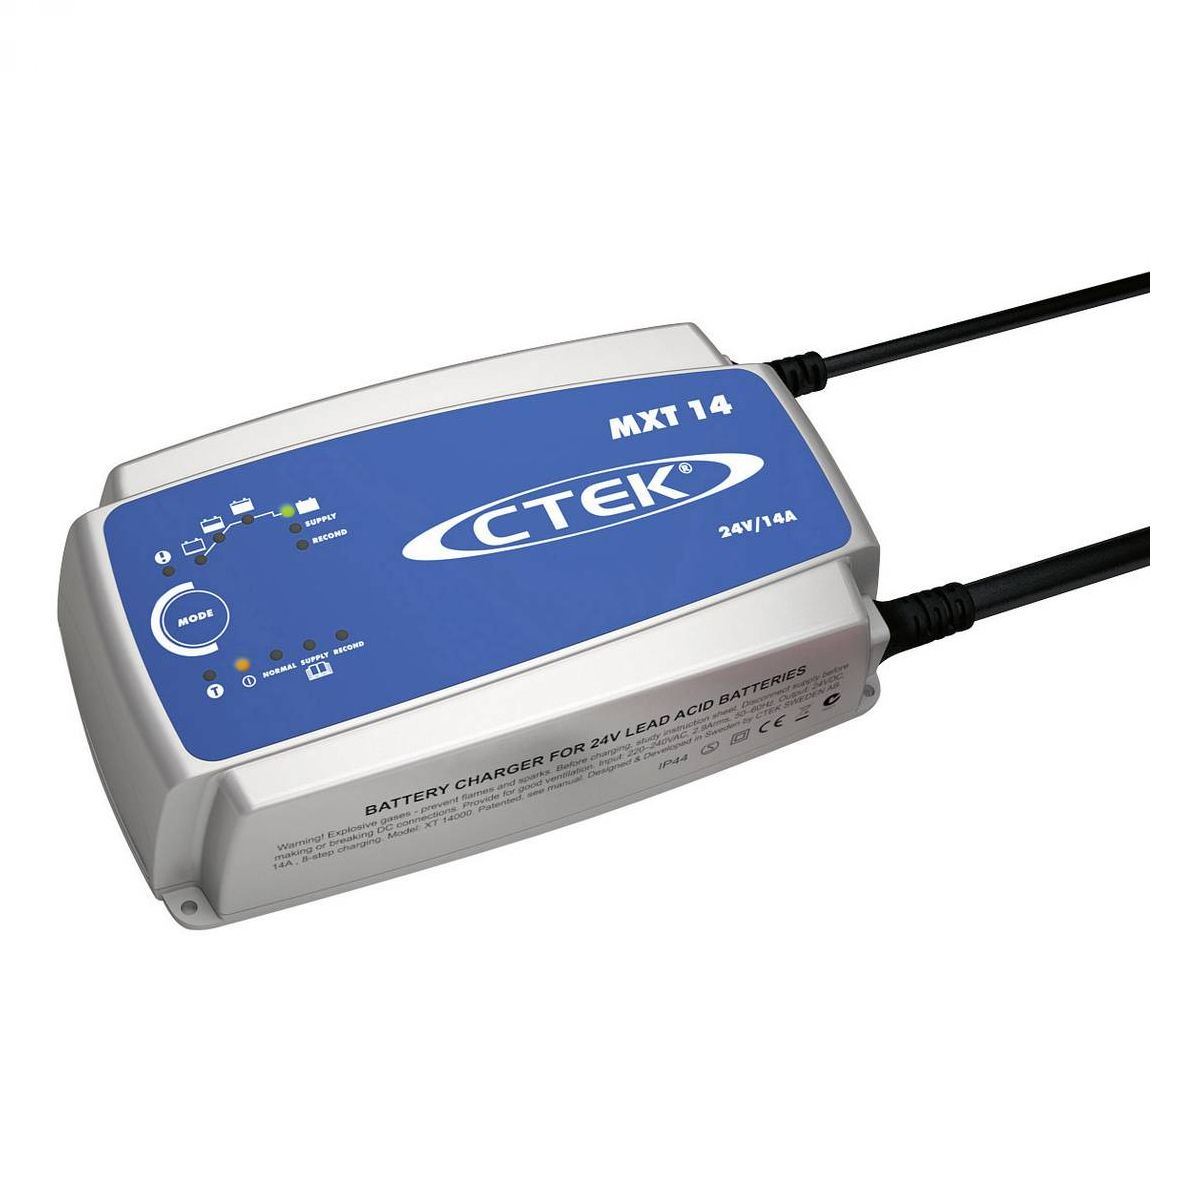 CTEK MXT 14 profesionalni punjač 24V akumulatora WET MF GEL AGM